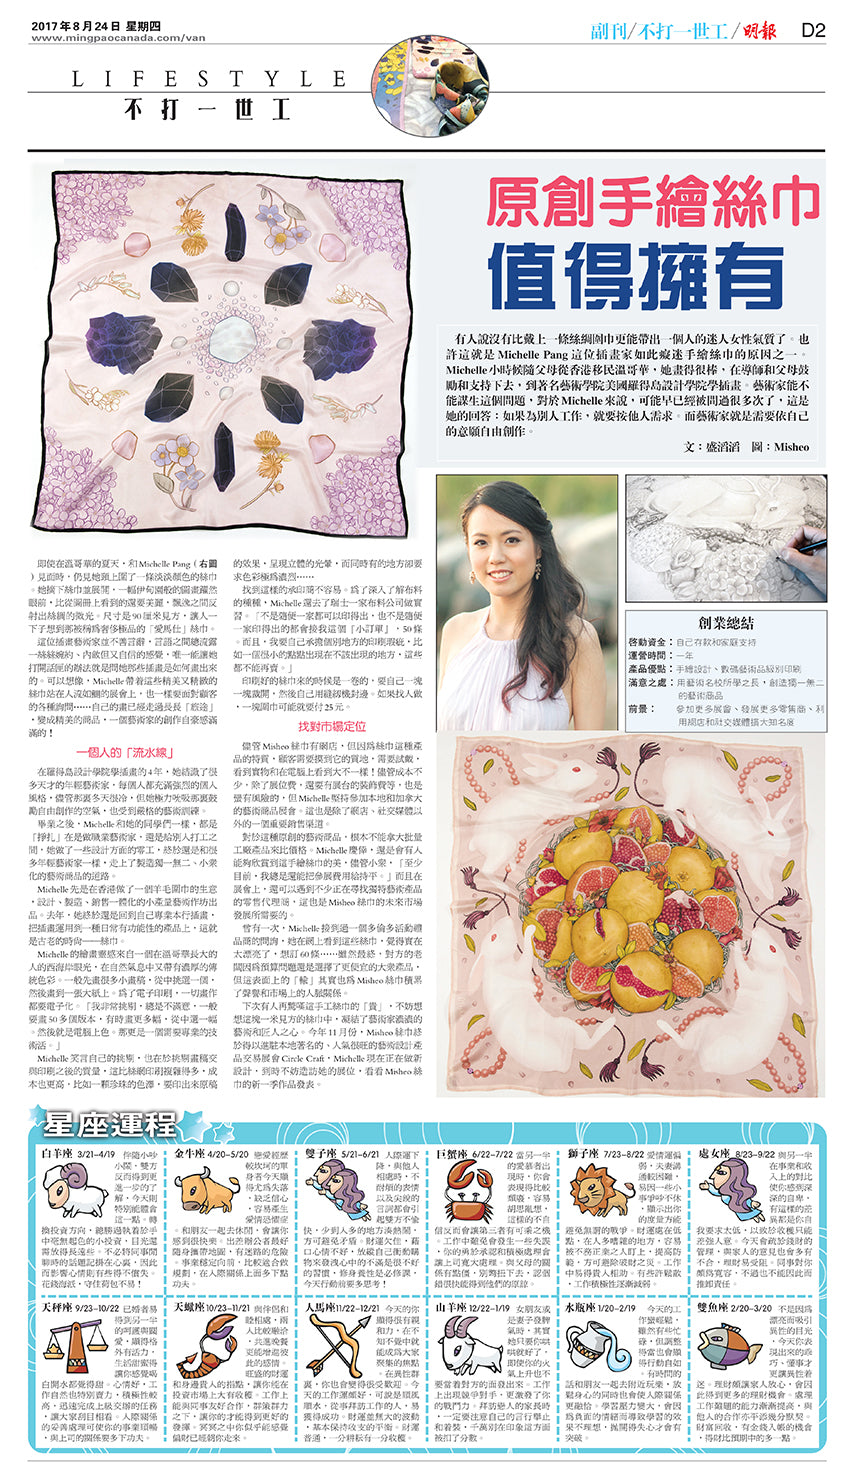 Ming Pao Canada Newspaper